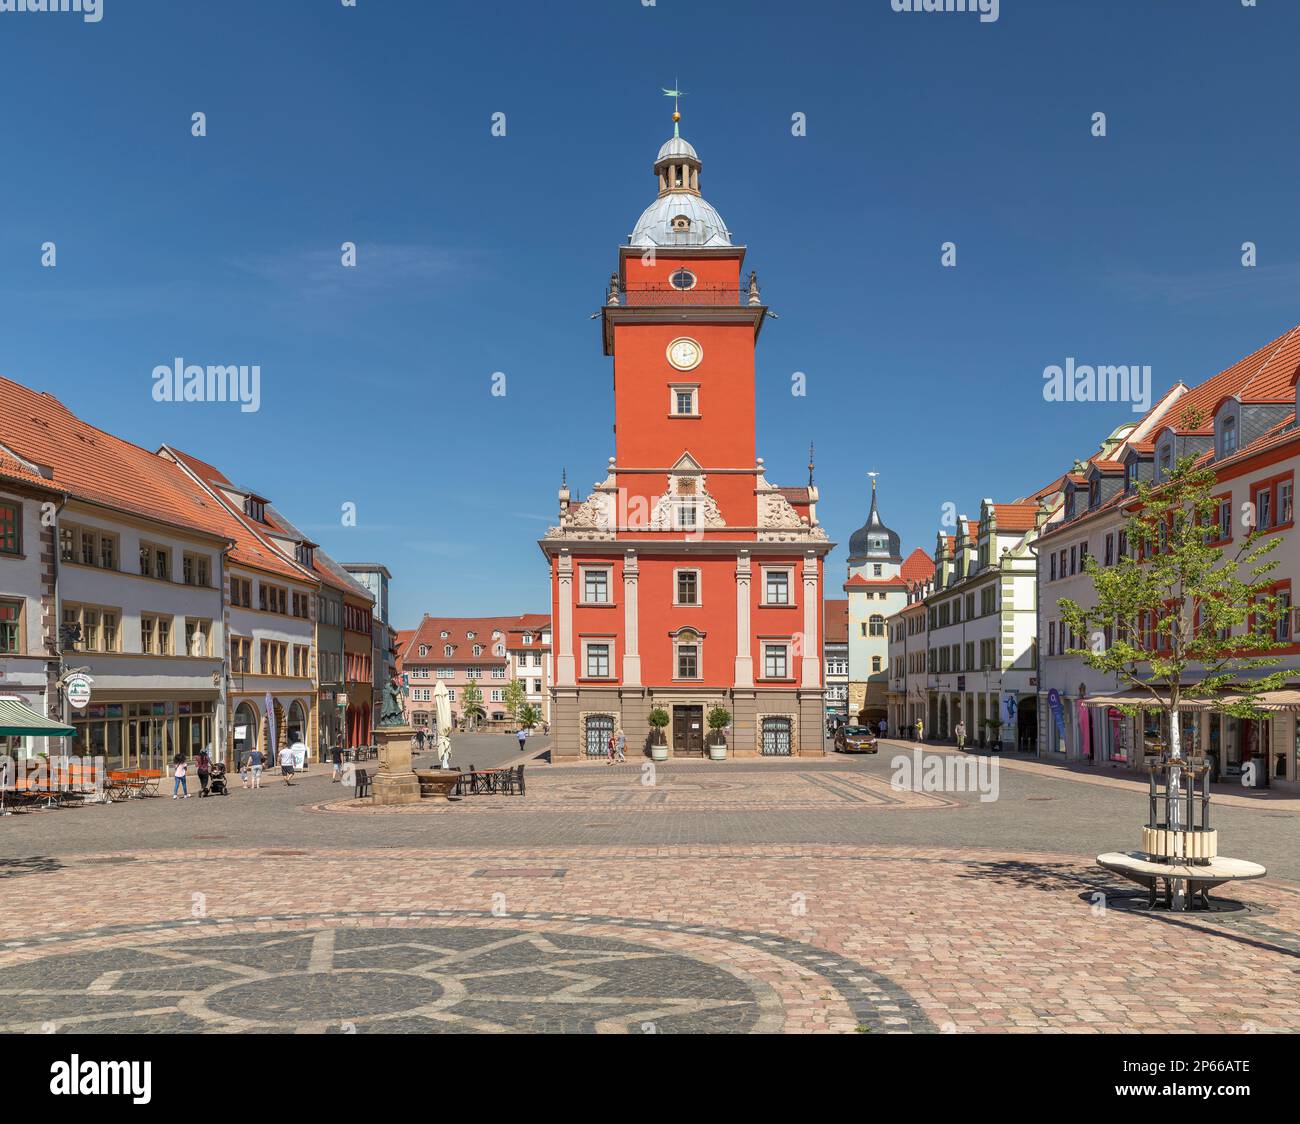 Hauptmarkt marketplace and town hall, Gotha, Thuringian Basin, Thuringia, Germany, Europe Stock Photo